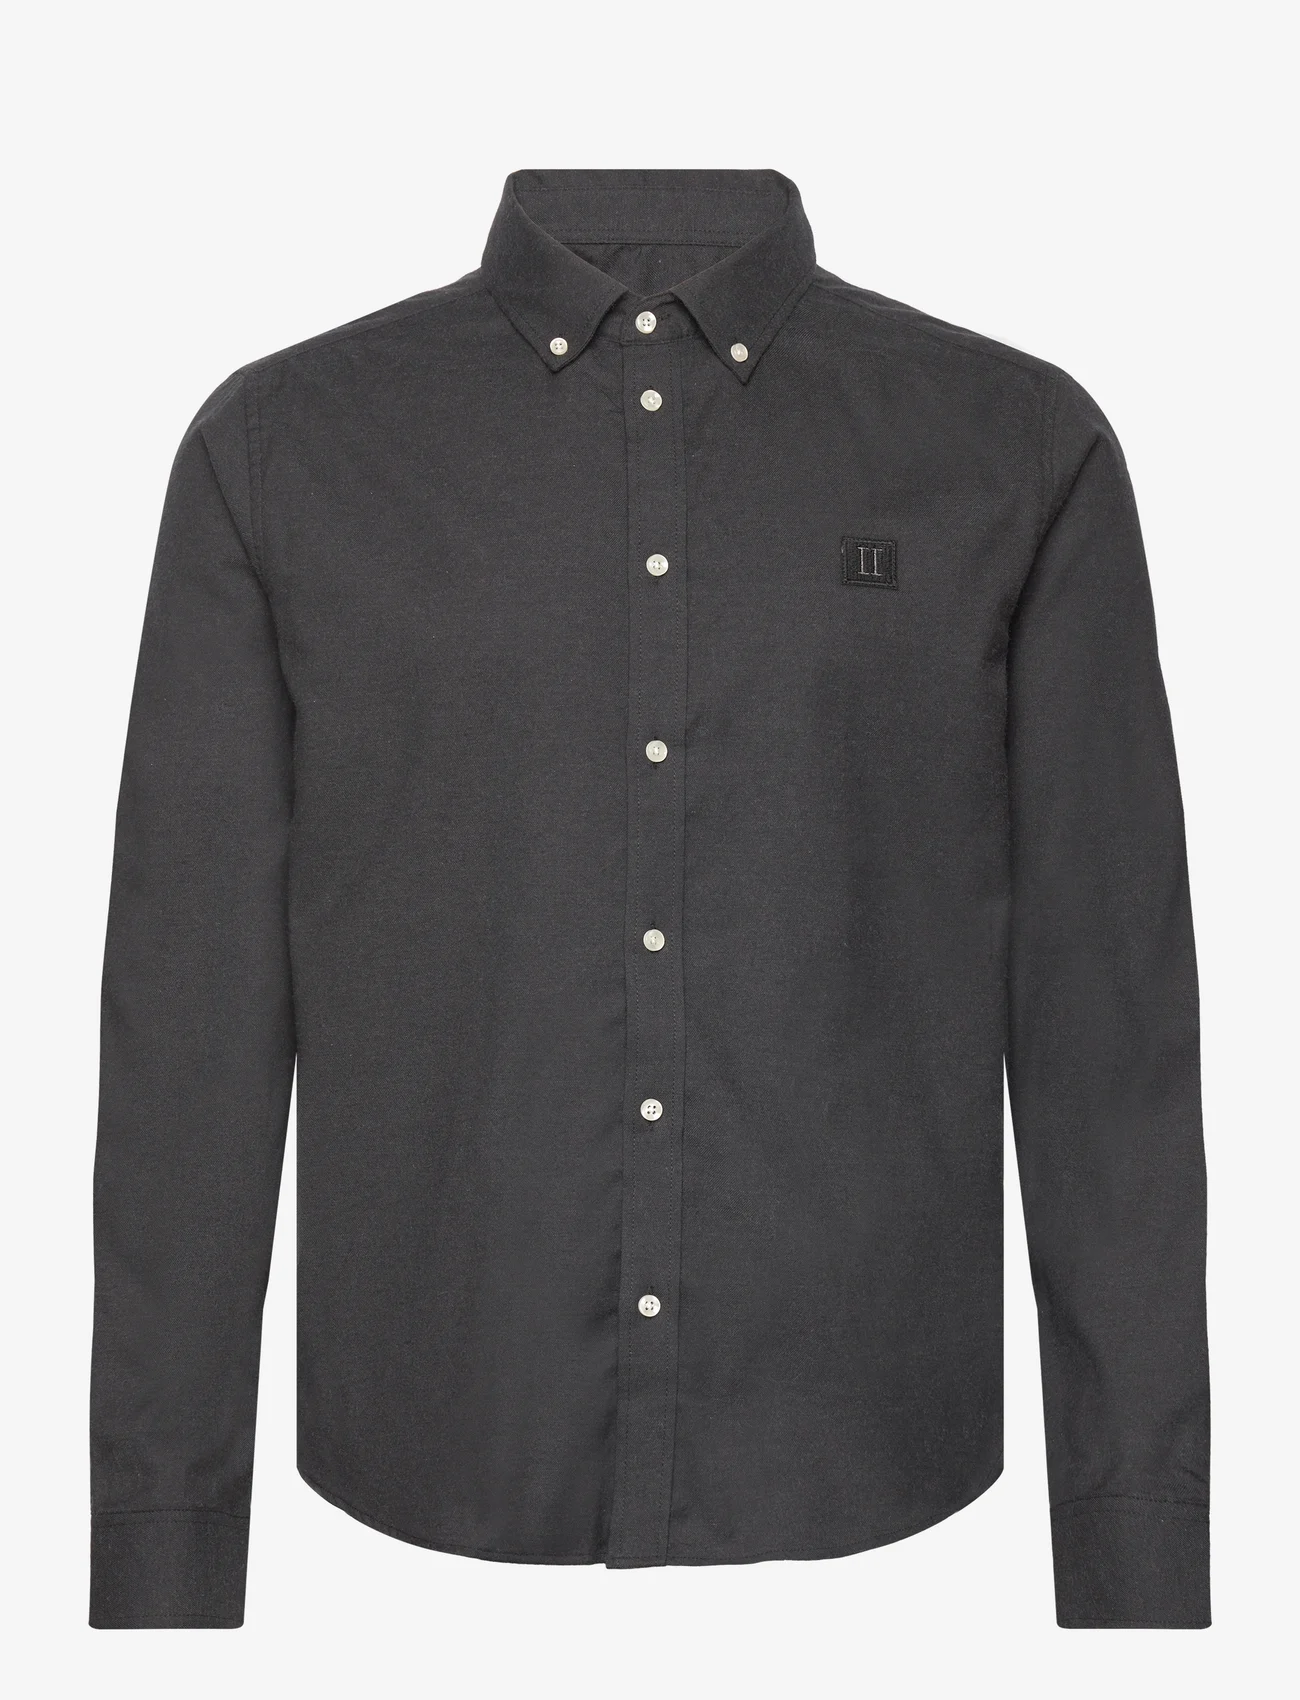 Les Deux - Piece Brushed Shirt - basic-hemden - black/charcoal-grey - 0